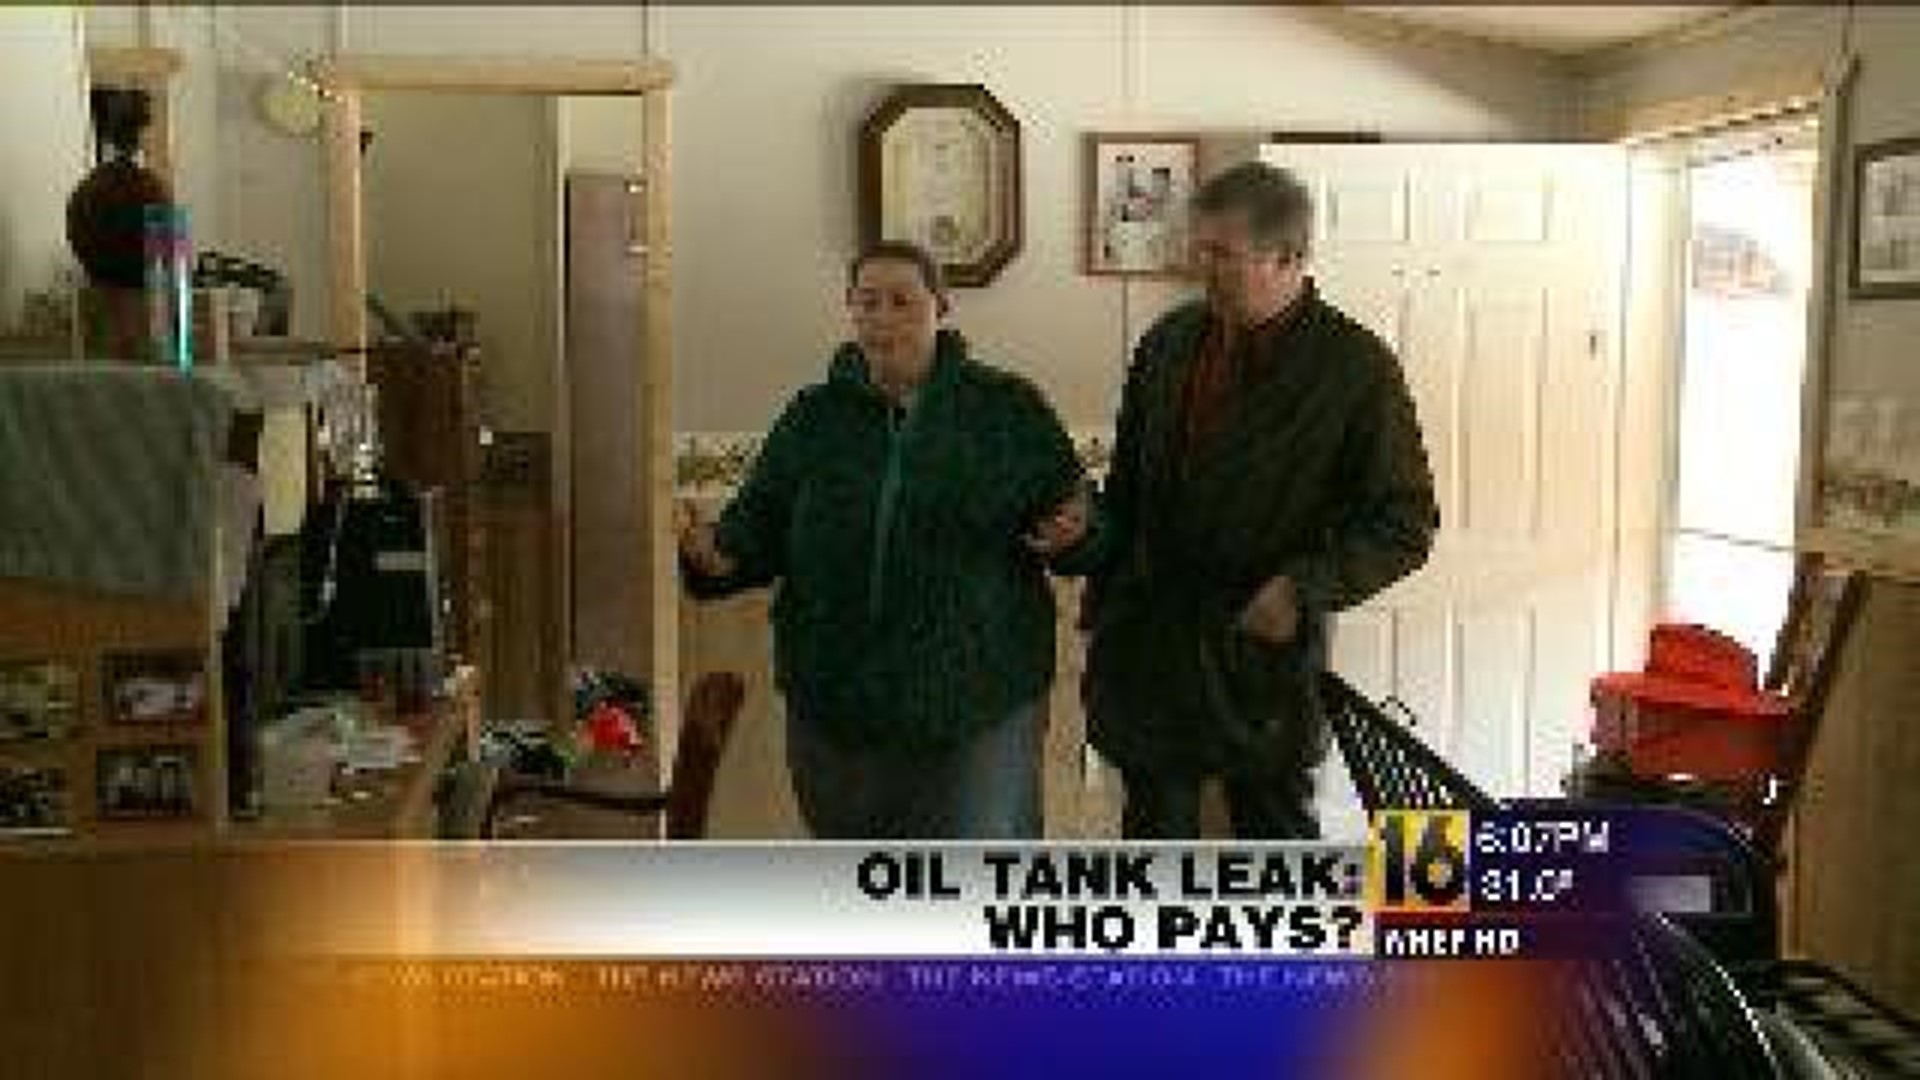 Oil Tank Leak: Who Pays?